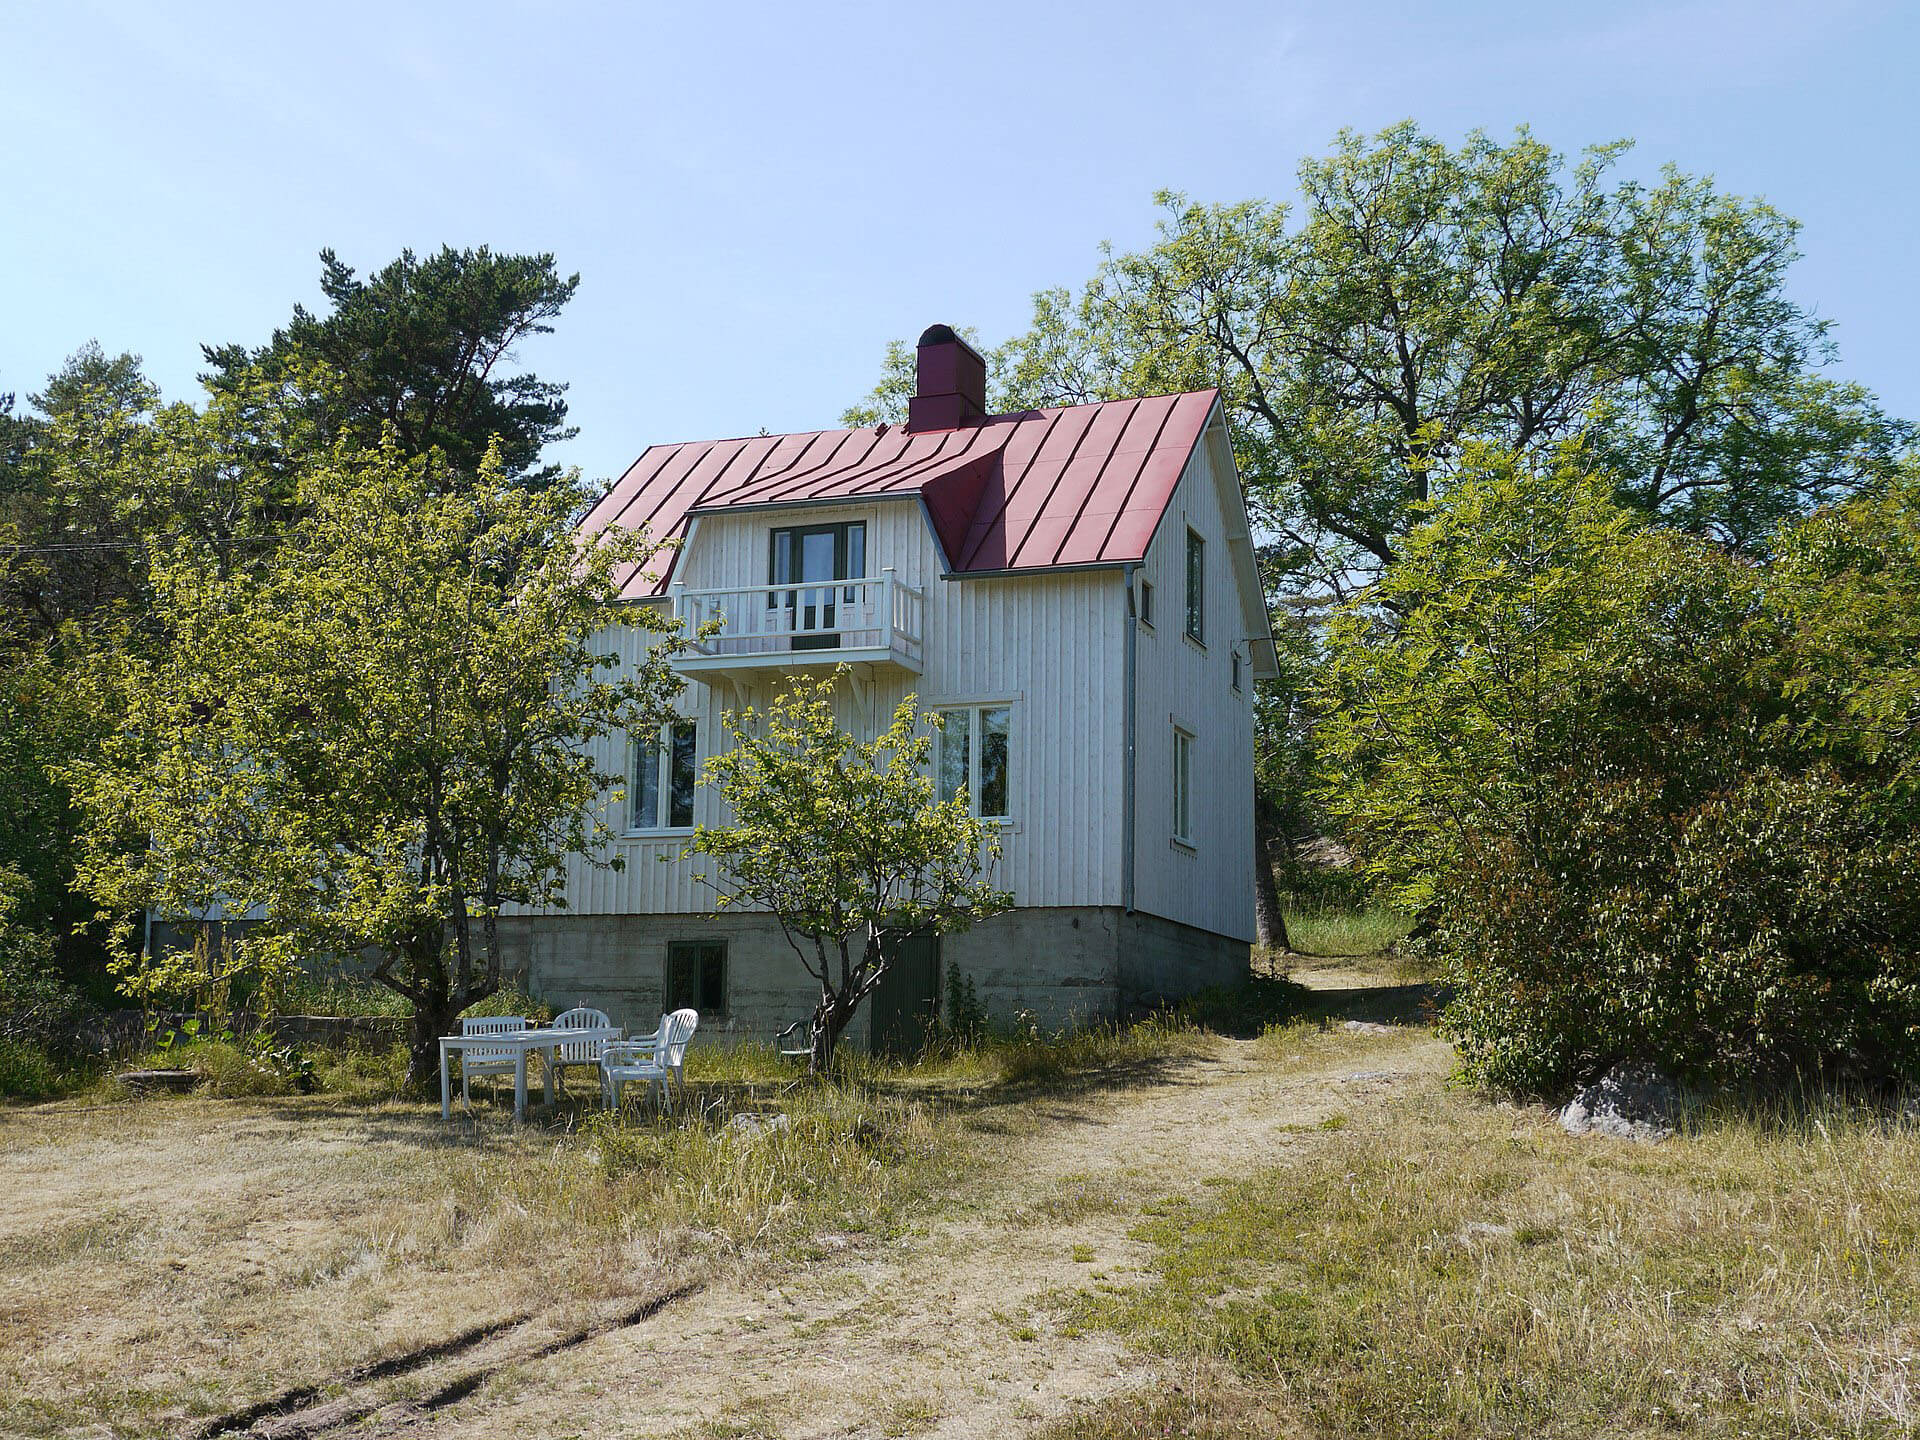 Anni Blomqvist's home